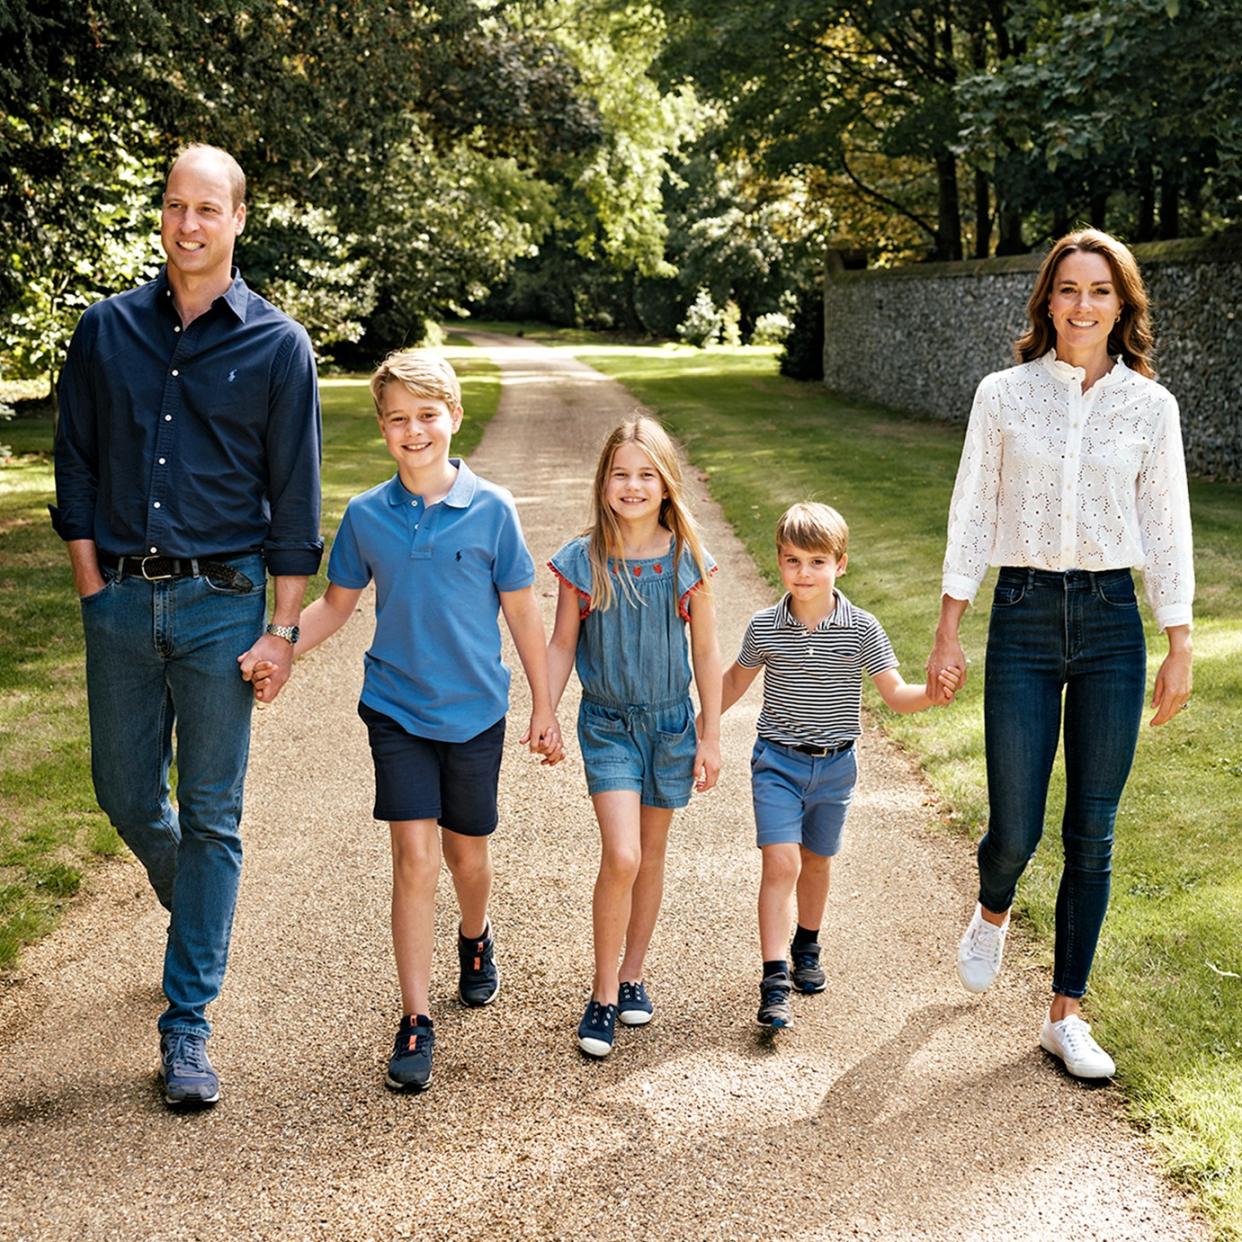  Prince William, Kate Middleton, Prince George, Princess Charlotte, Prince Louis. 